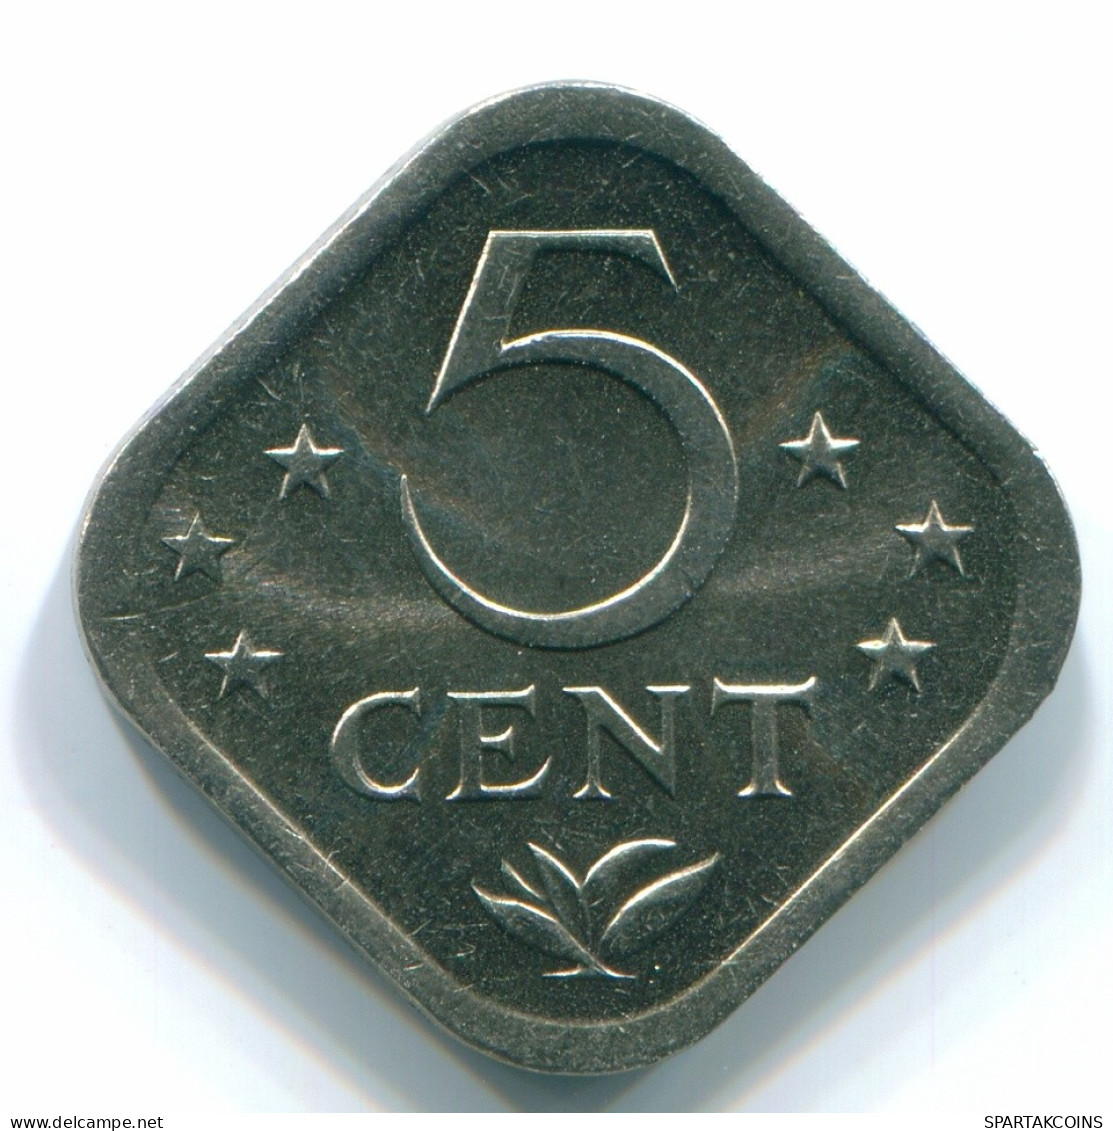 5 CENTS 1980 NETHERLANDS ANTILLES Nickel Colonial Coin #S12305.U.A - Antilles Néerlandaises